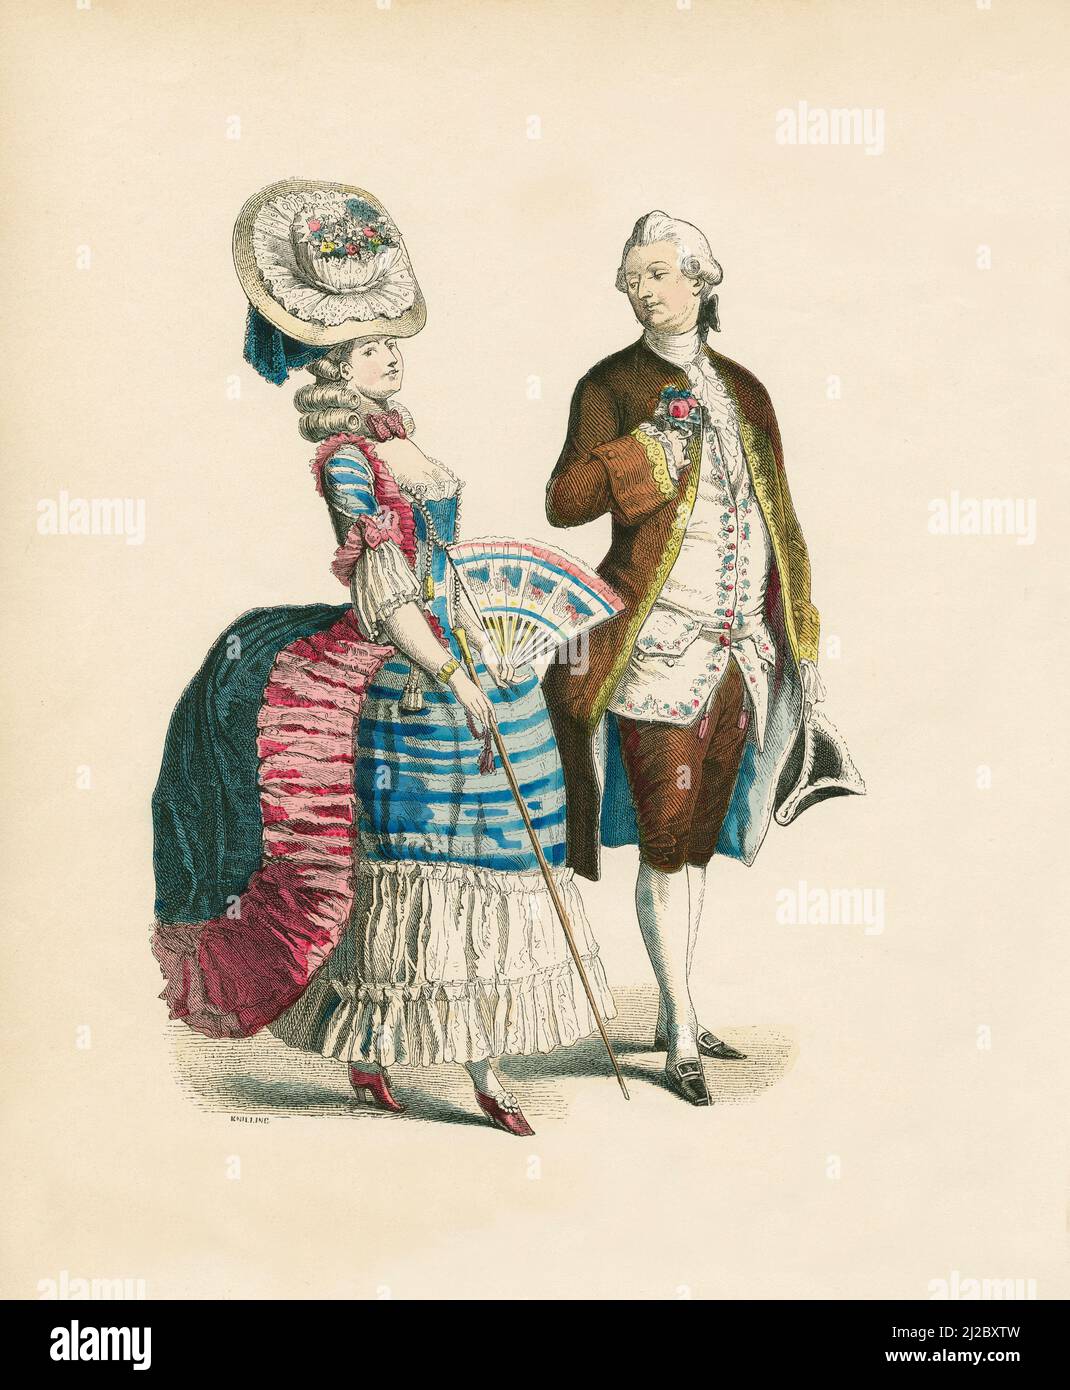 French Costumes, 1780, Illustration, The History of Costume, Braun & Schneider, Munich, Germany, 1861-1880 Stock Photo